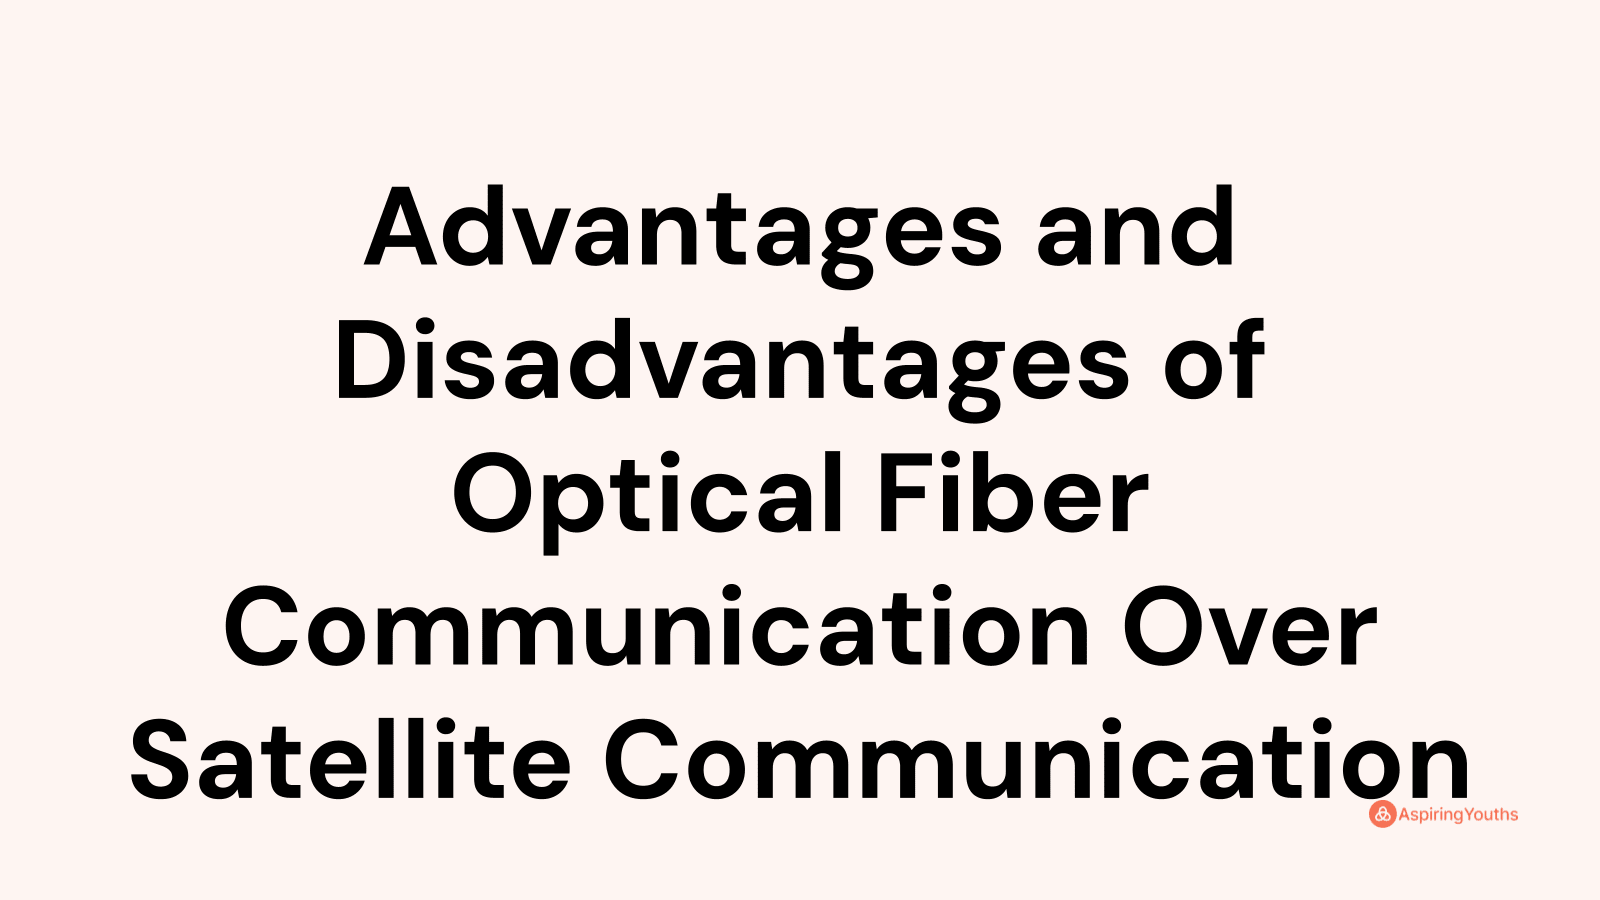 Advantages and disadvantages of Optical Fiber Communication Over Satellite Communication